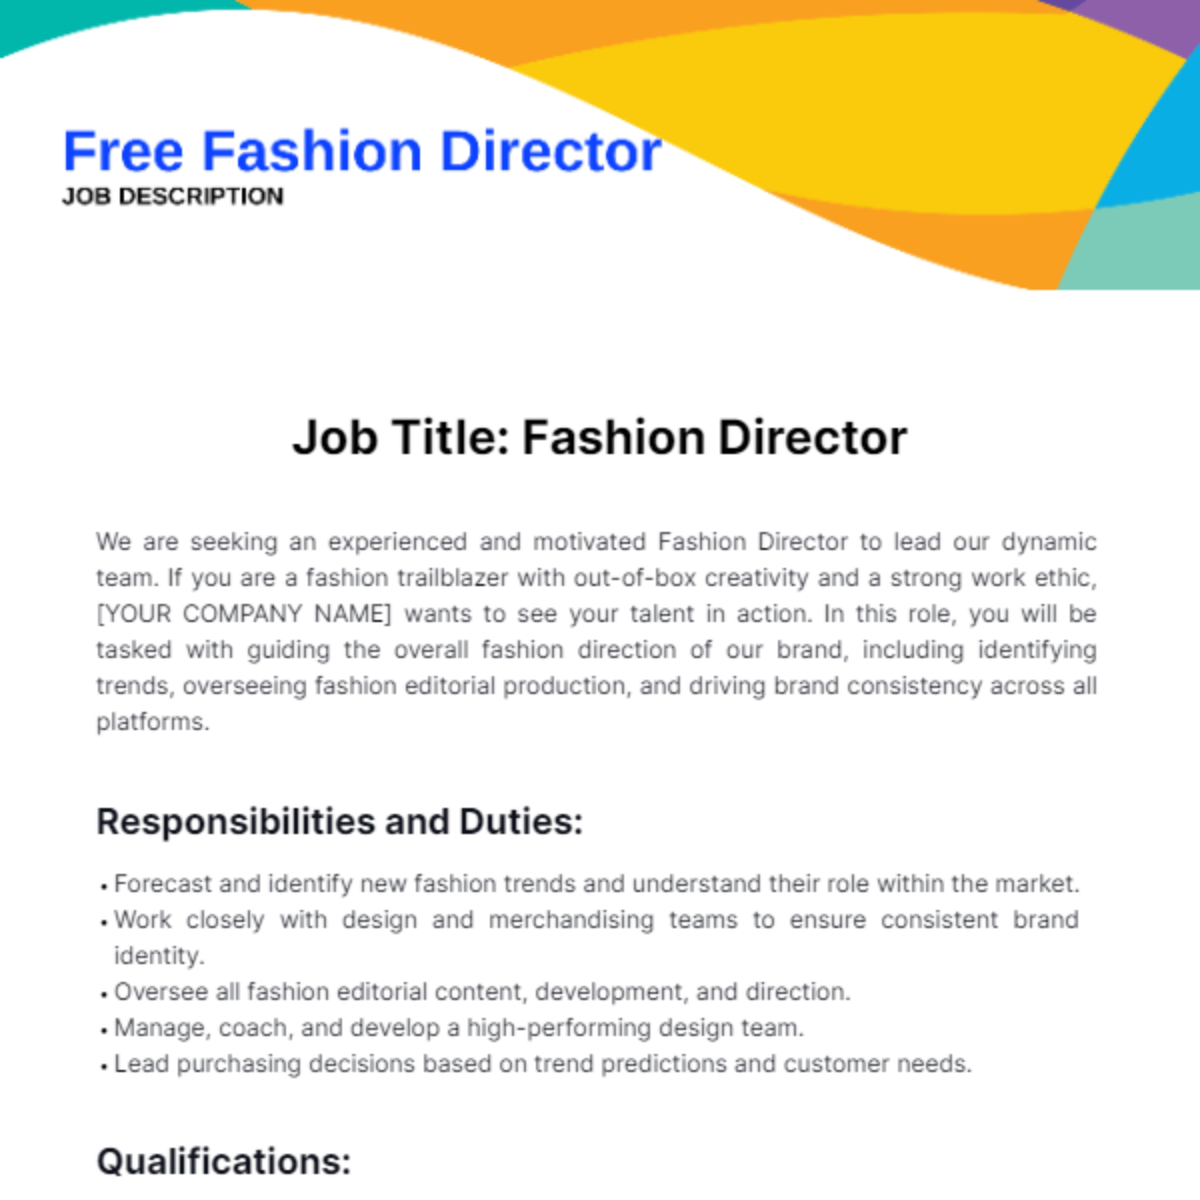 Free Fashion Director Job Description Template